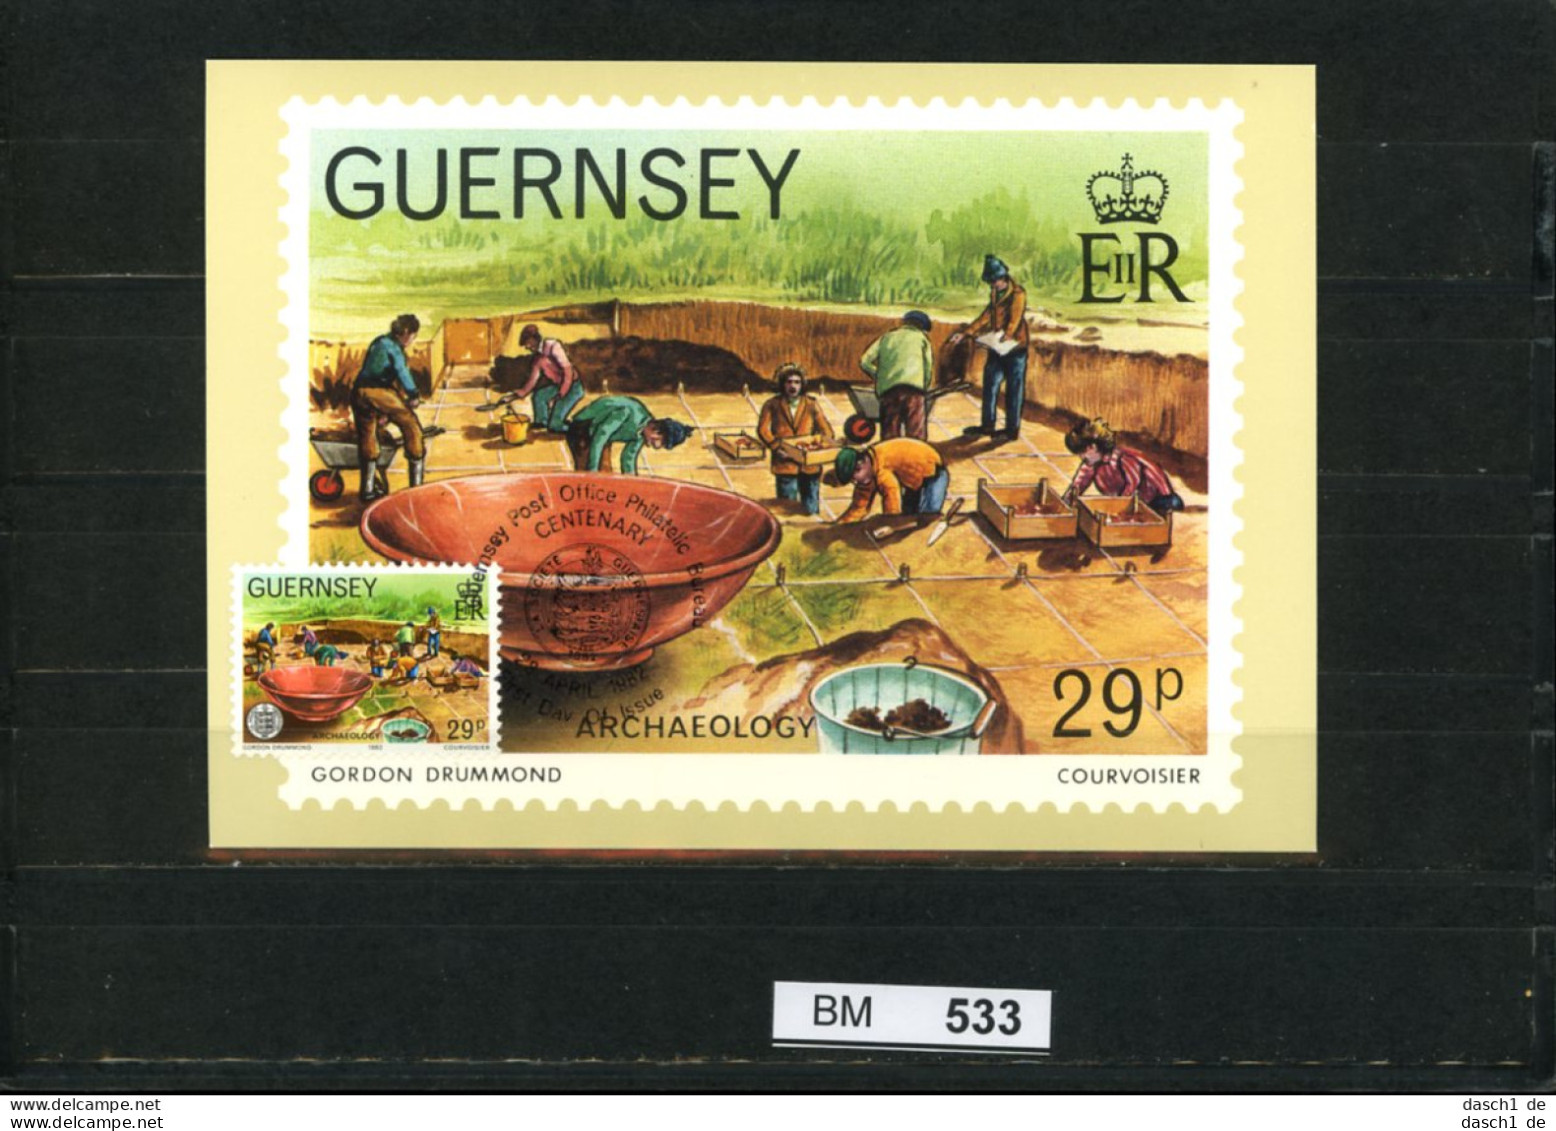 Guernsey, MC 1982 - Archaeology